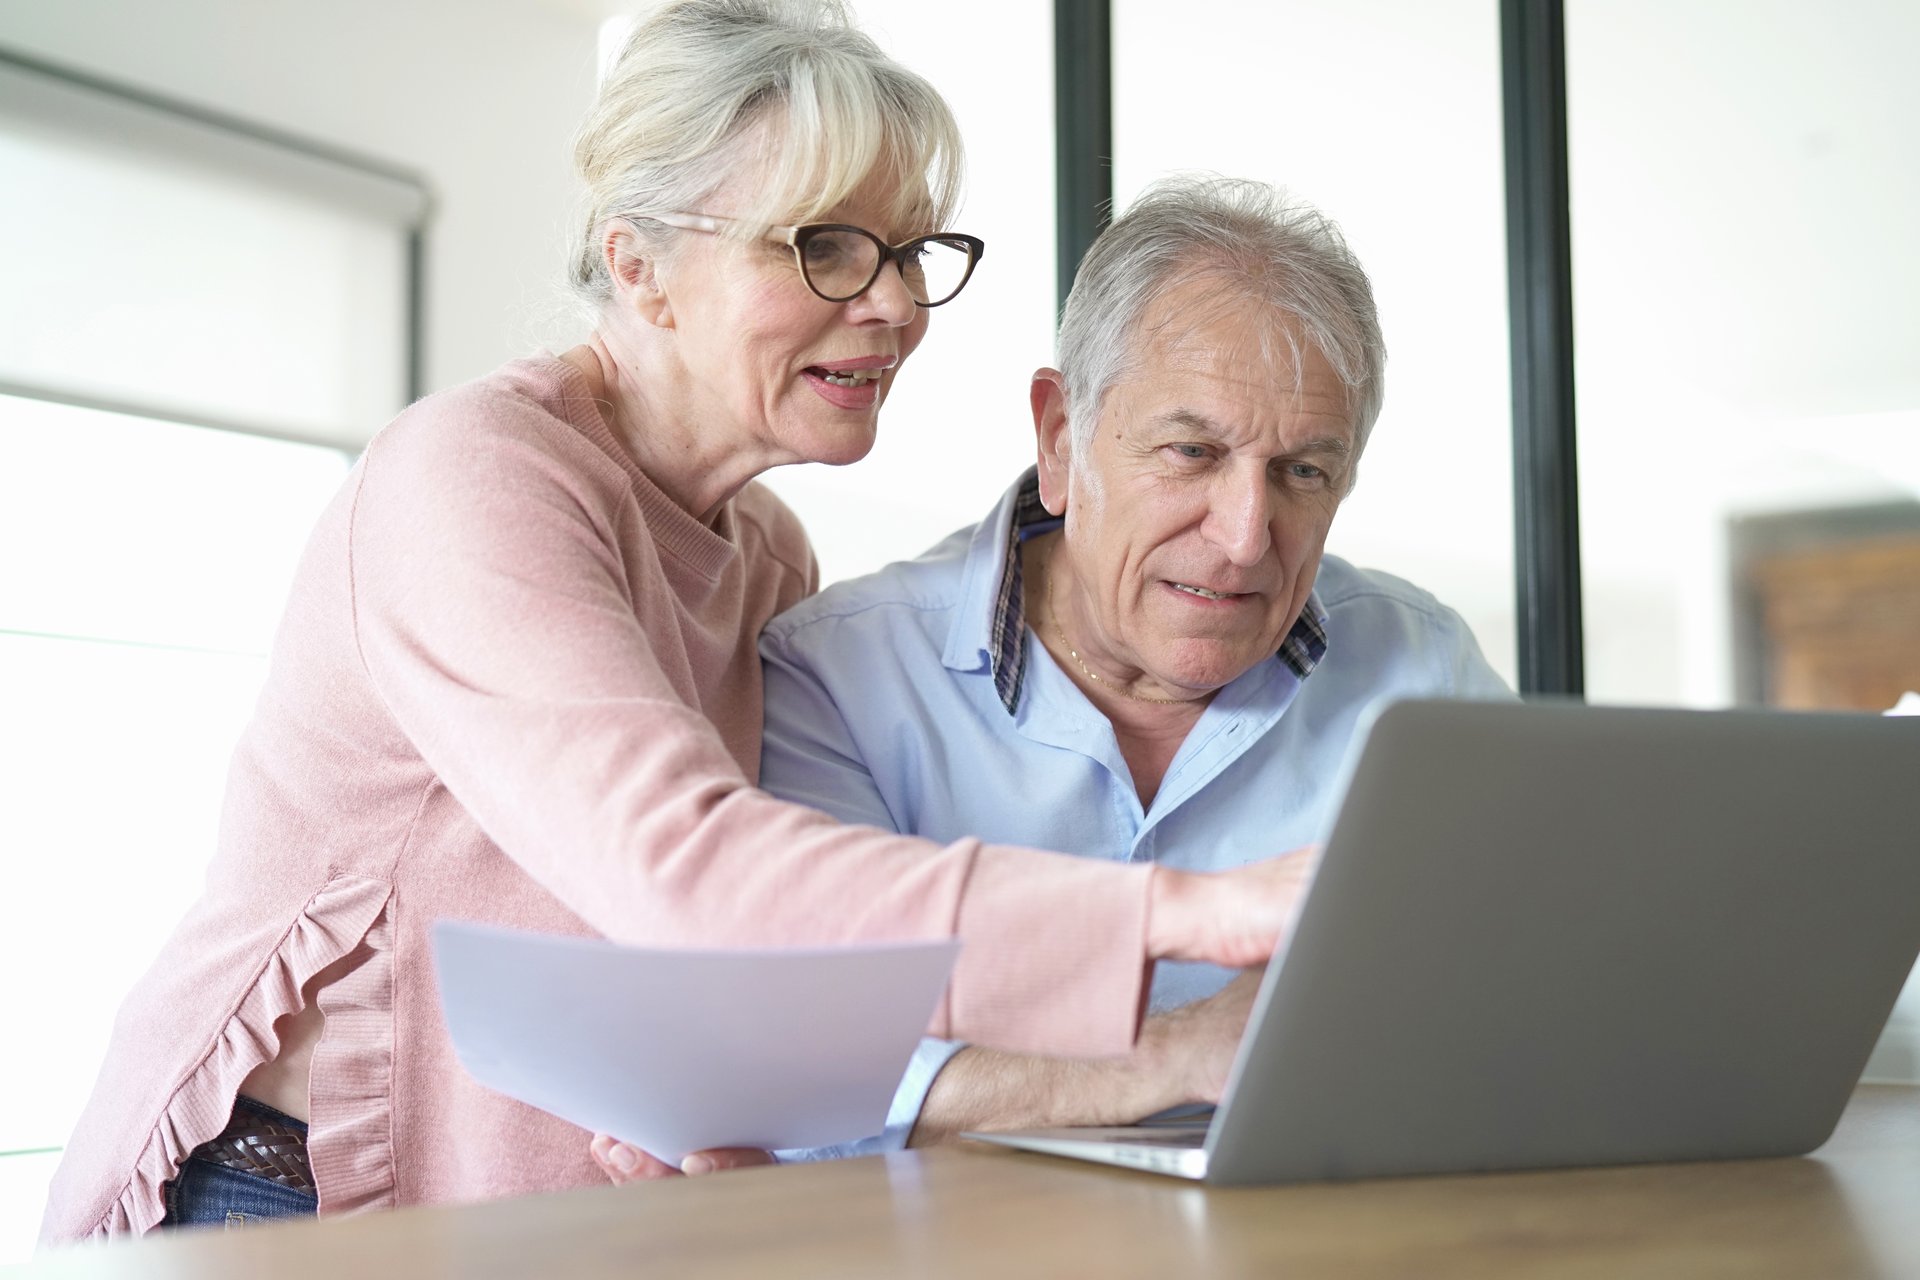 A senior couple reviews their finances on a laptop computer